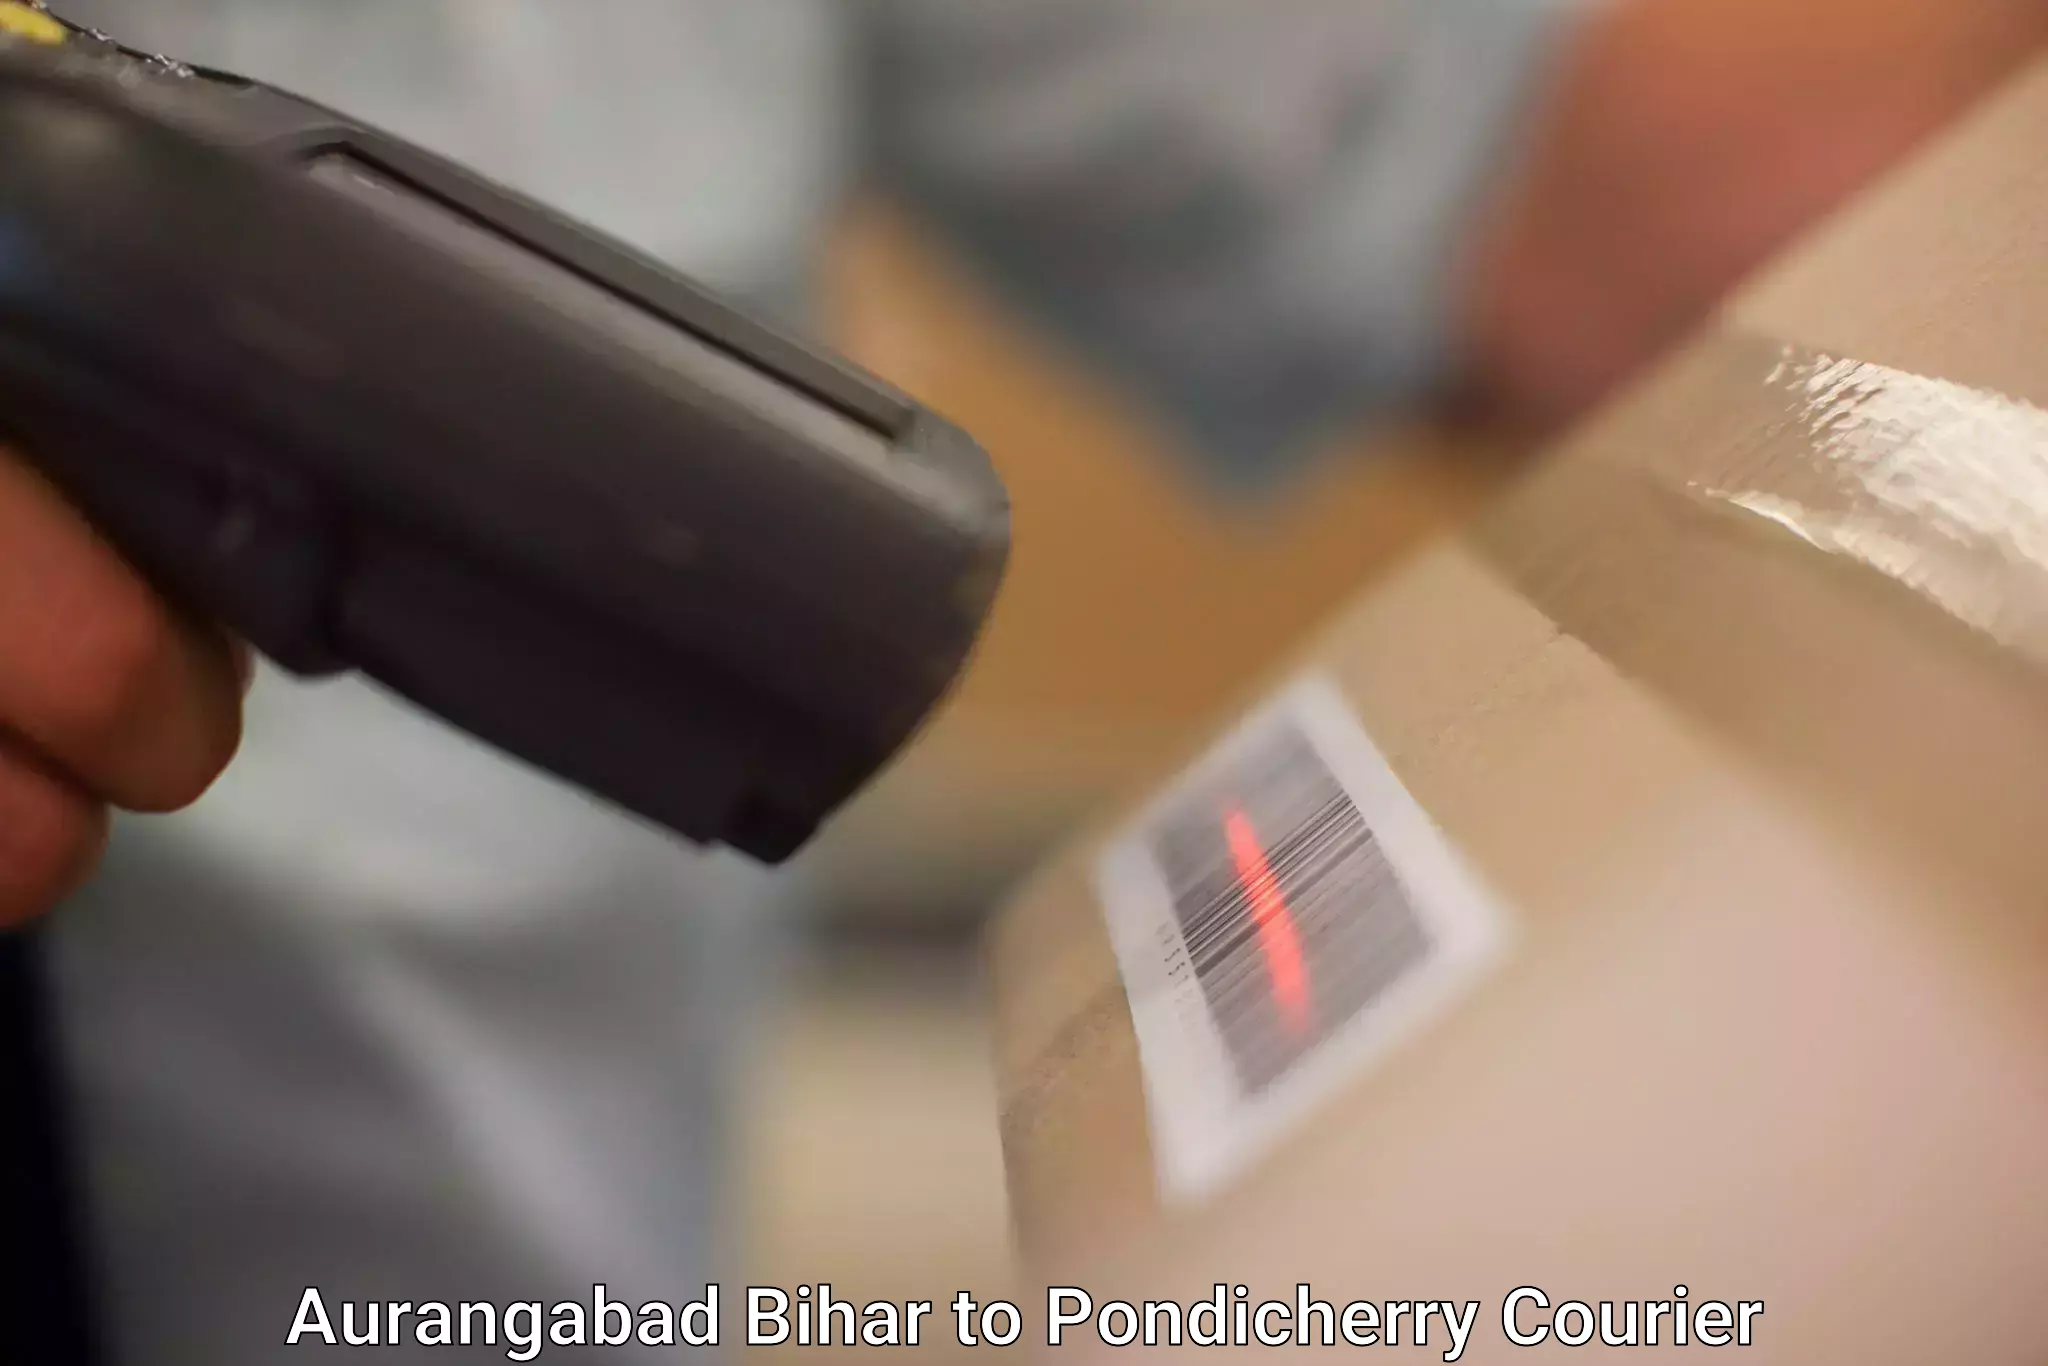 Global parcel delivery Aurangabad Bihar to Pondicherry